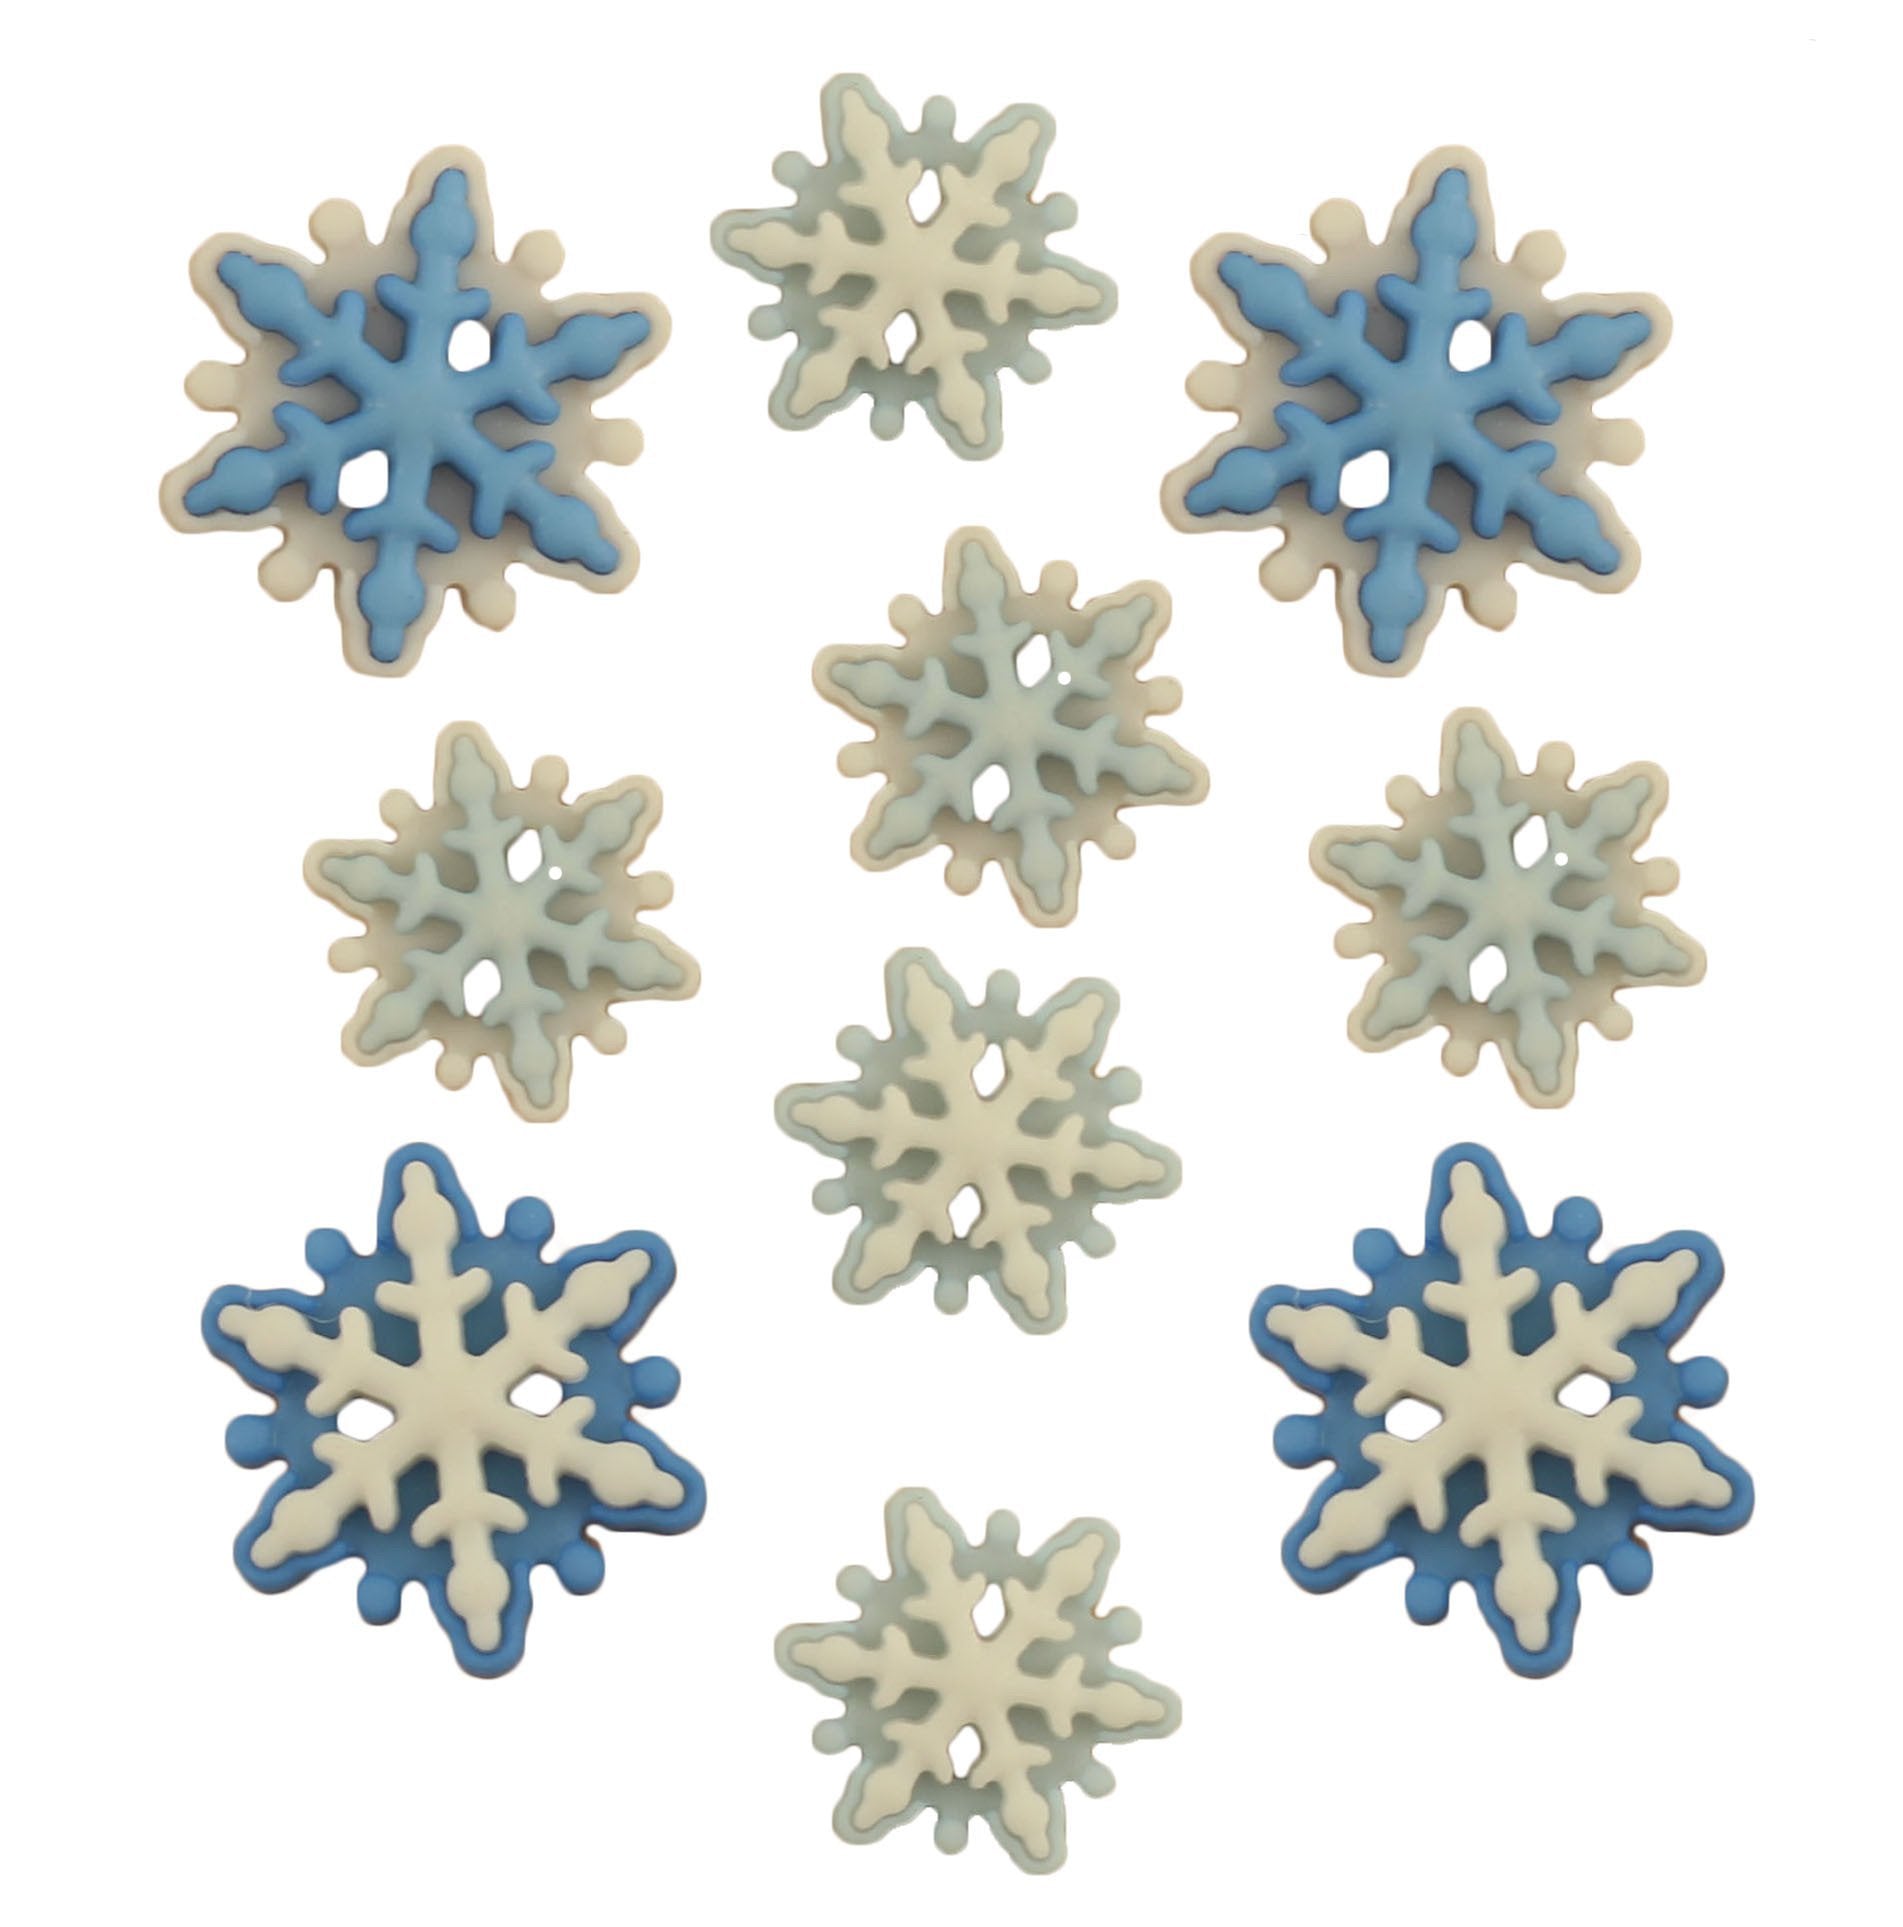 30pcs/lot Fashion White Snowflake Buttons Snow Flower Ddsign